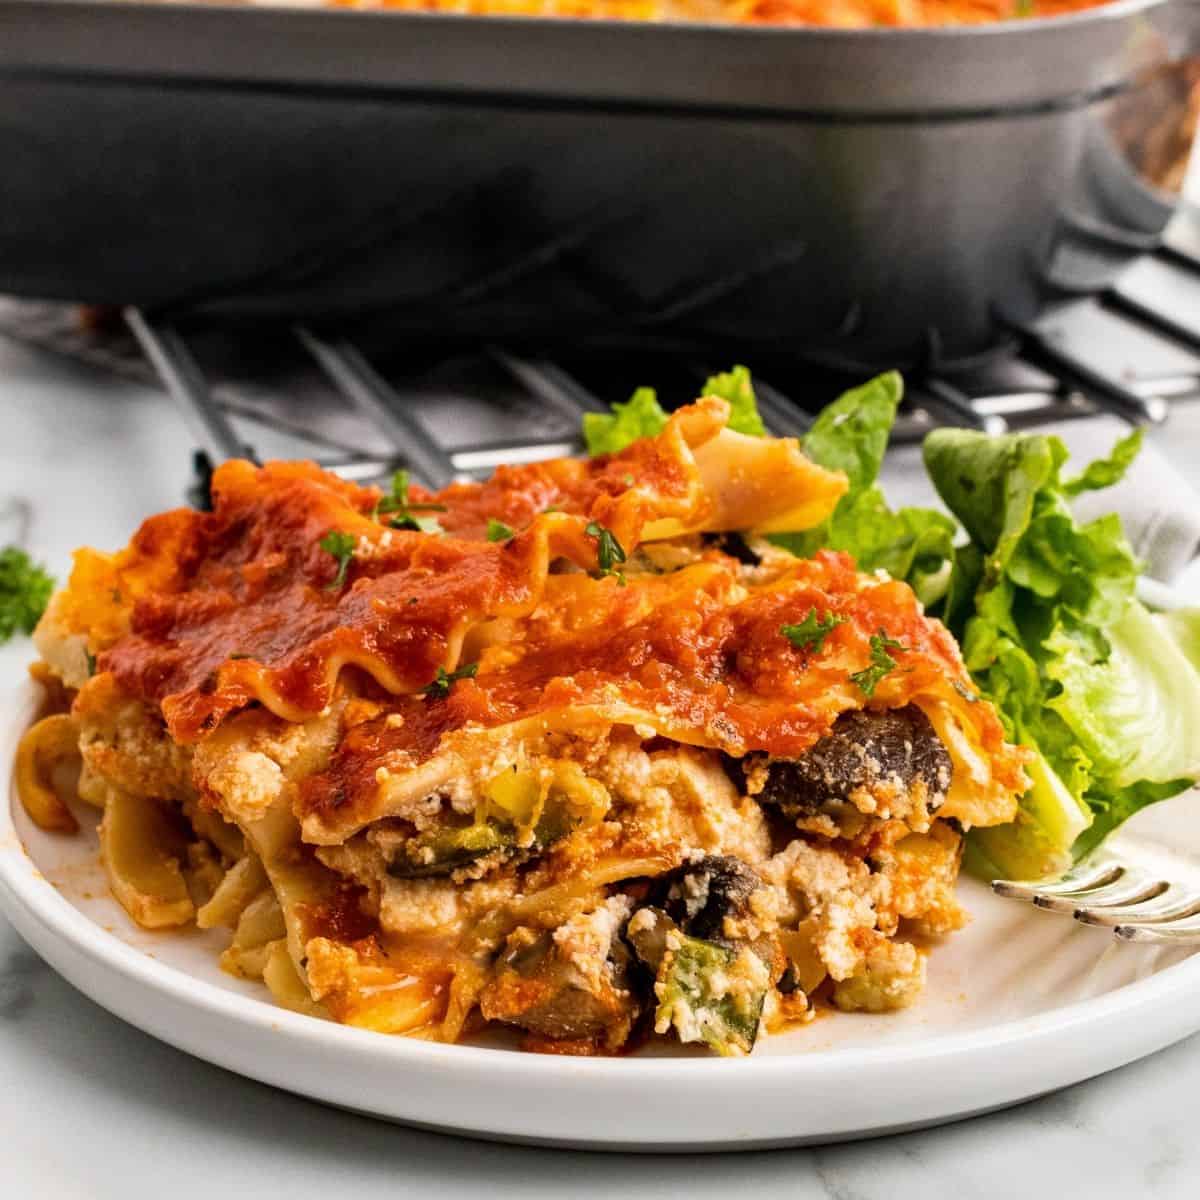 Vegetable lasagna recipe